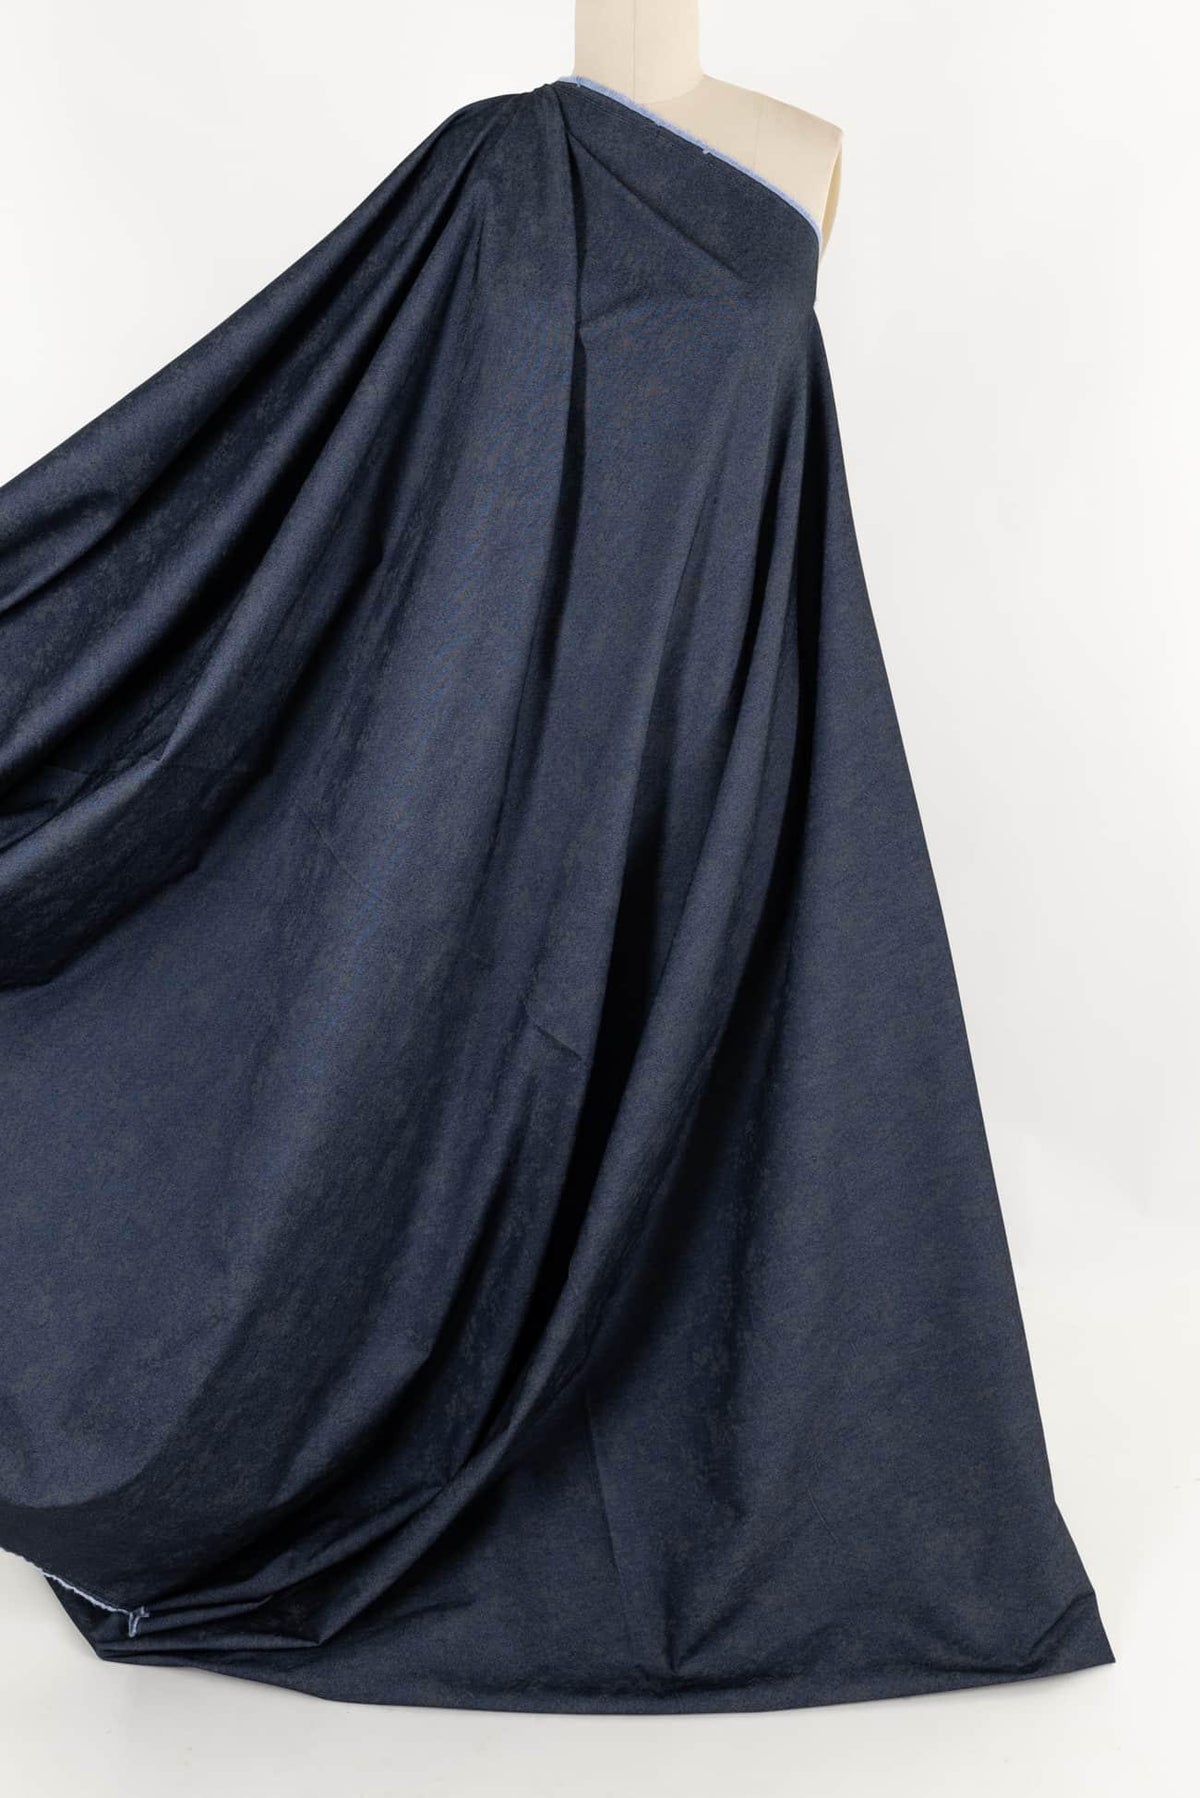 Astral Blue Italian Cotton Denim Woven - Marcy Tilton Fabrics